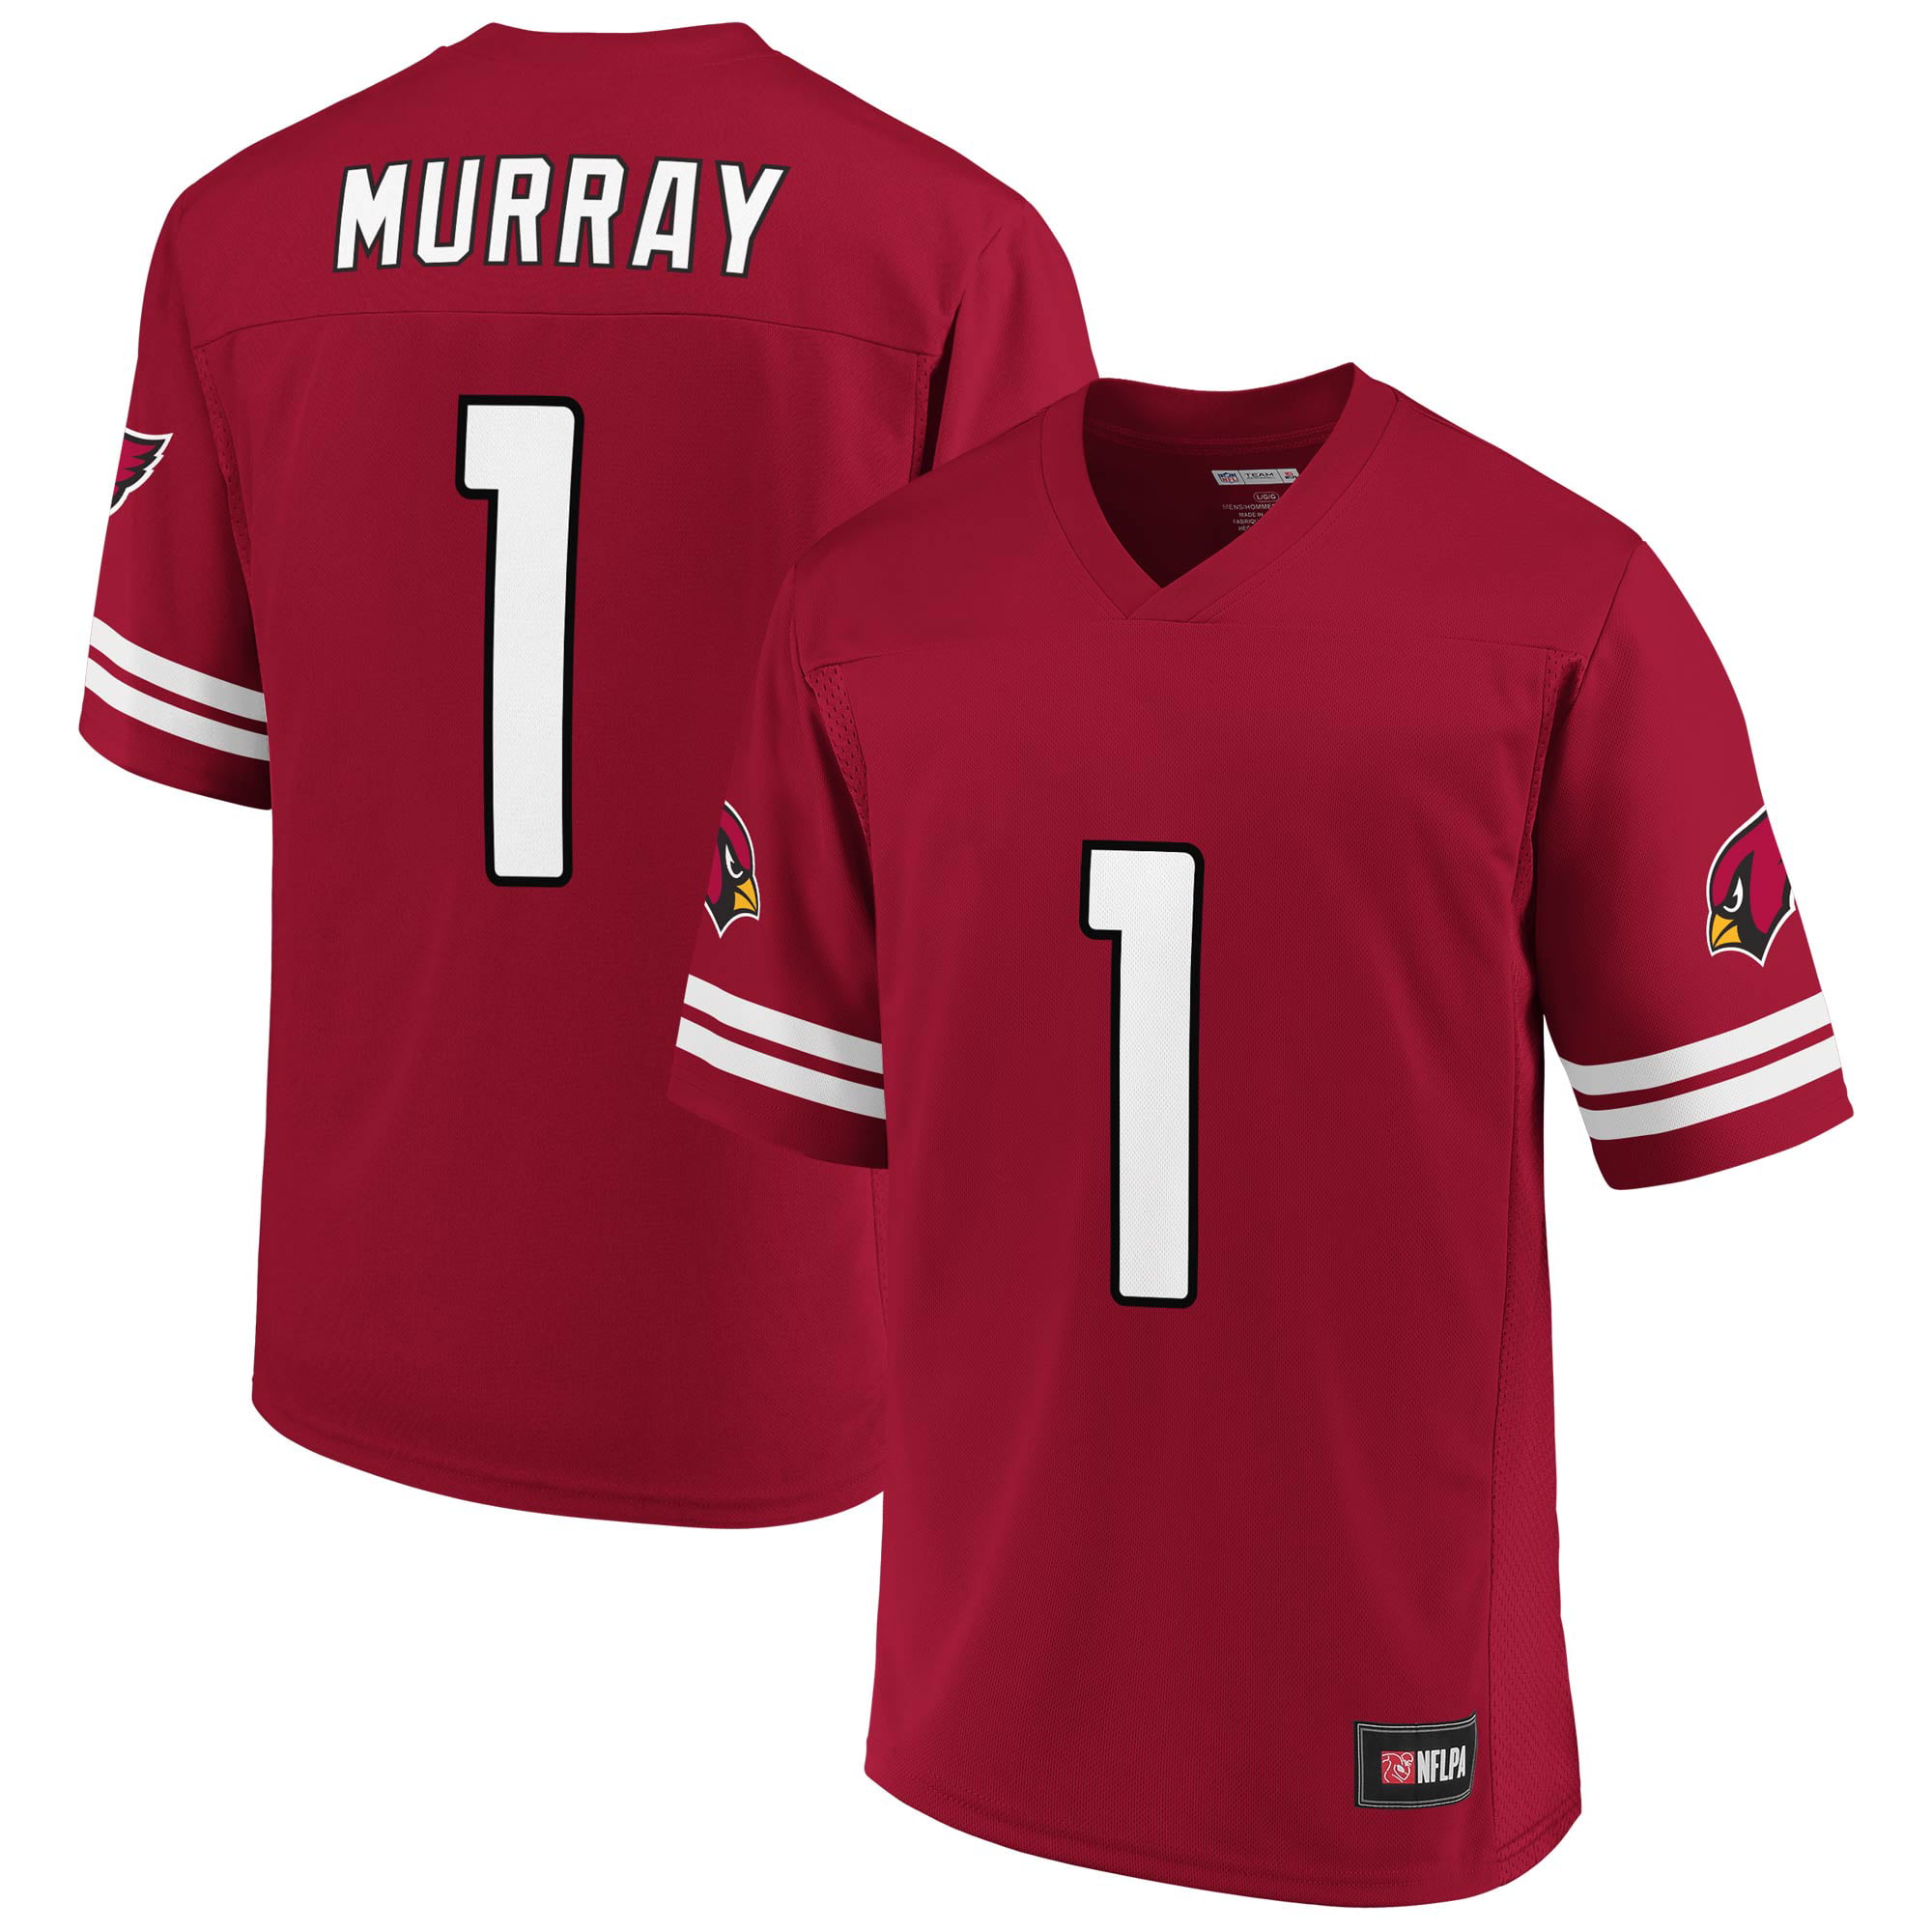 Men's NFL Pro Line by Fanatics Branded Kyler Murray Cardinal Arizona  Cardinals Player Jersey 